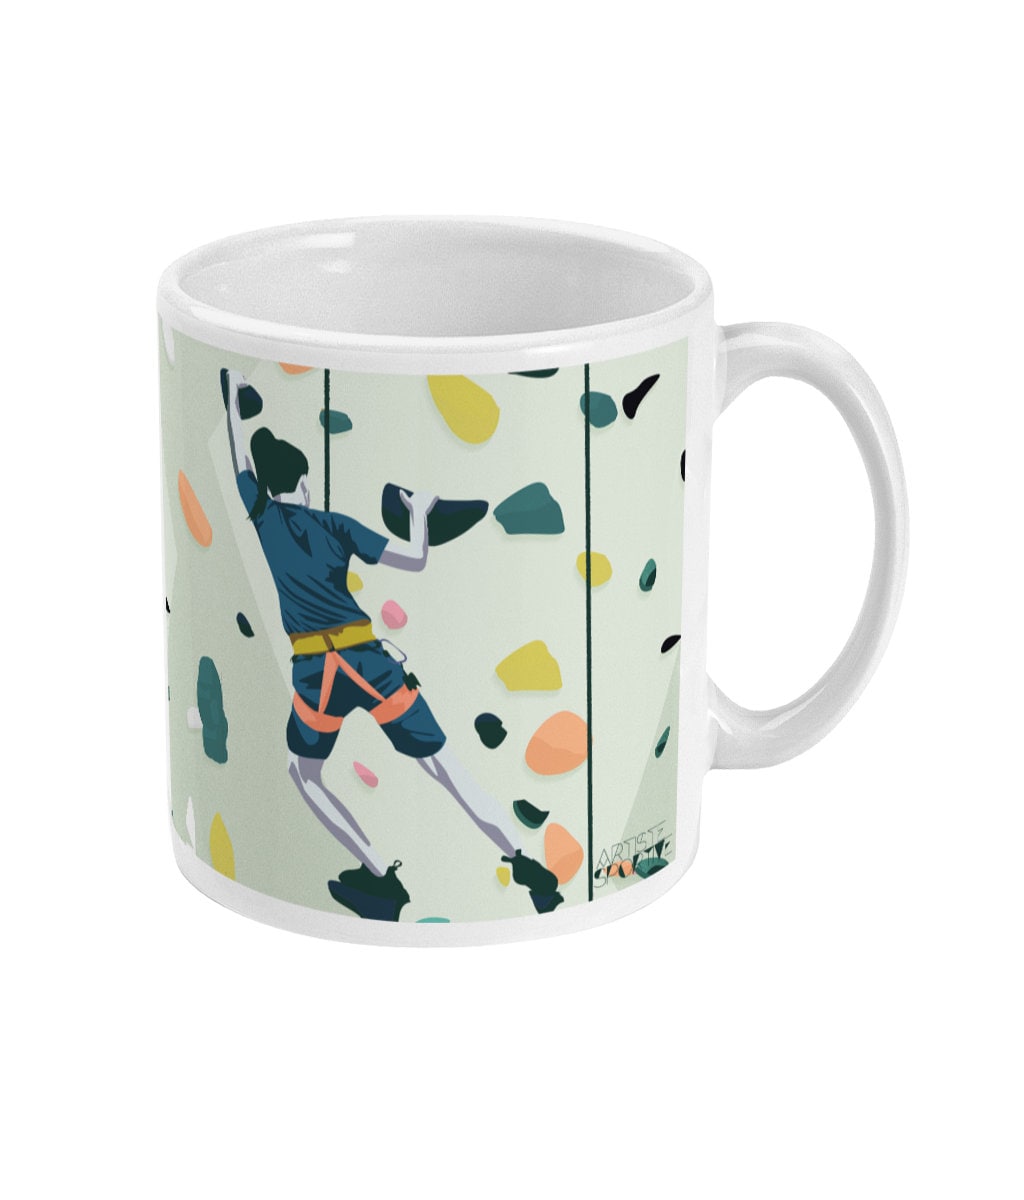 Climbing cup or mug "the woman who climbed" - Customizable